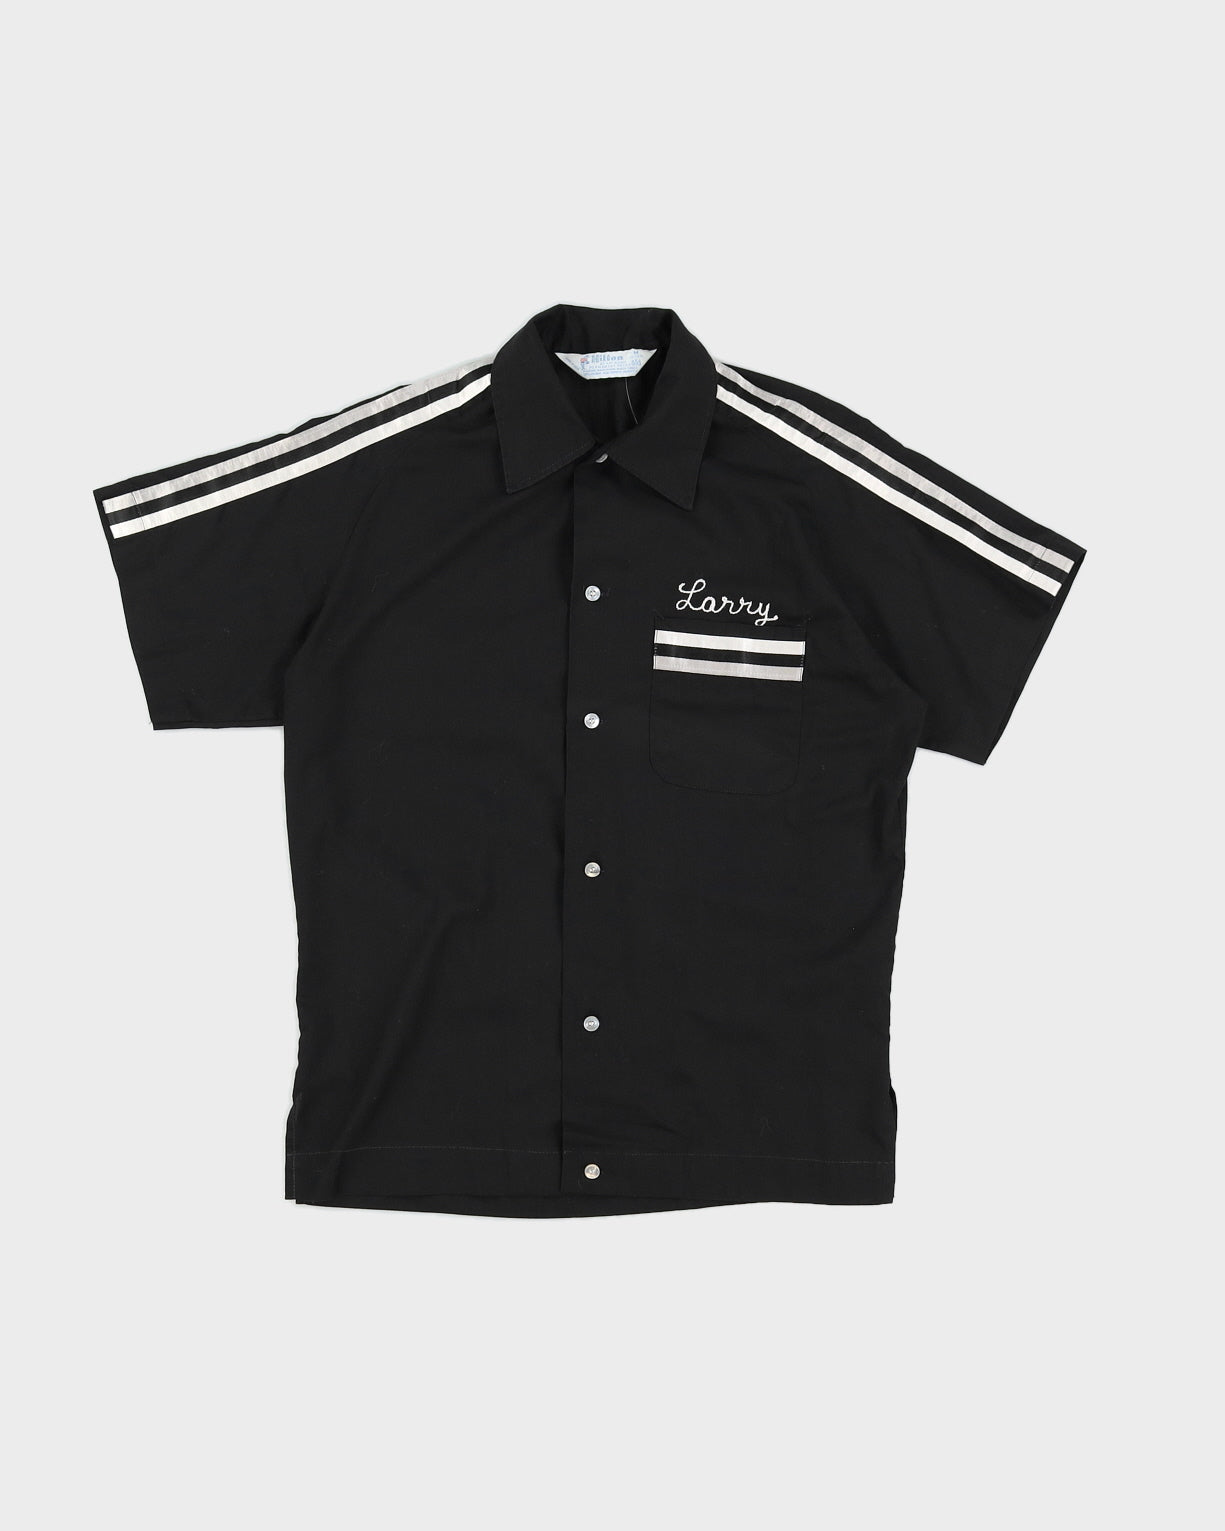 Vintage 70s Hilton Black Bowling Short Sleeved Shirt - M